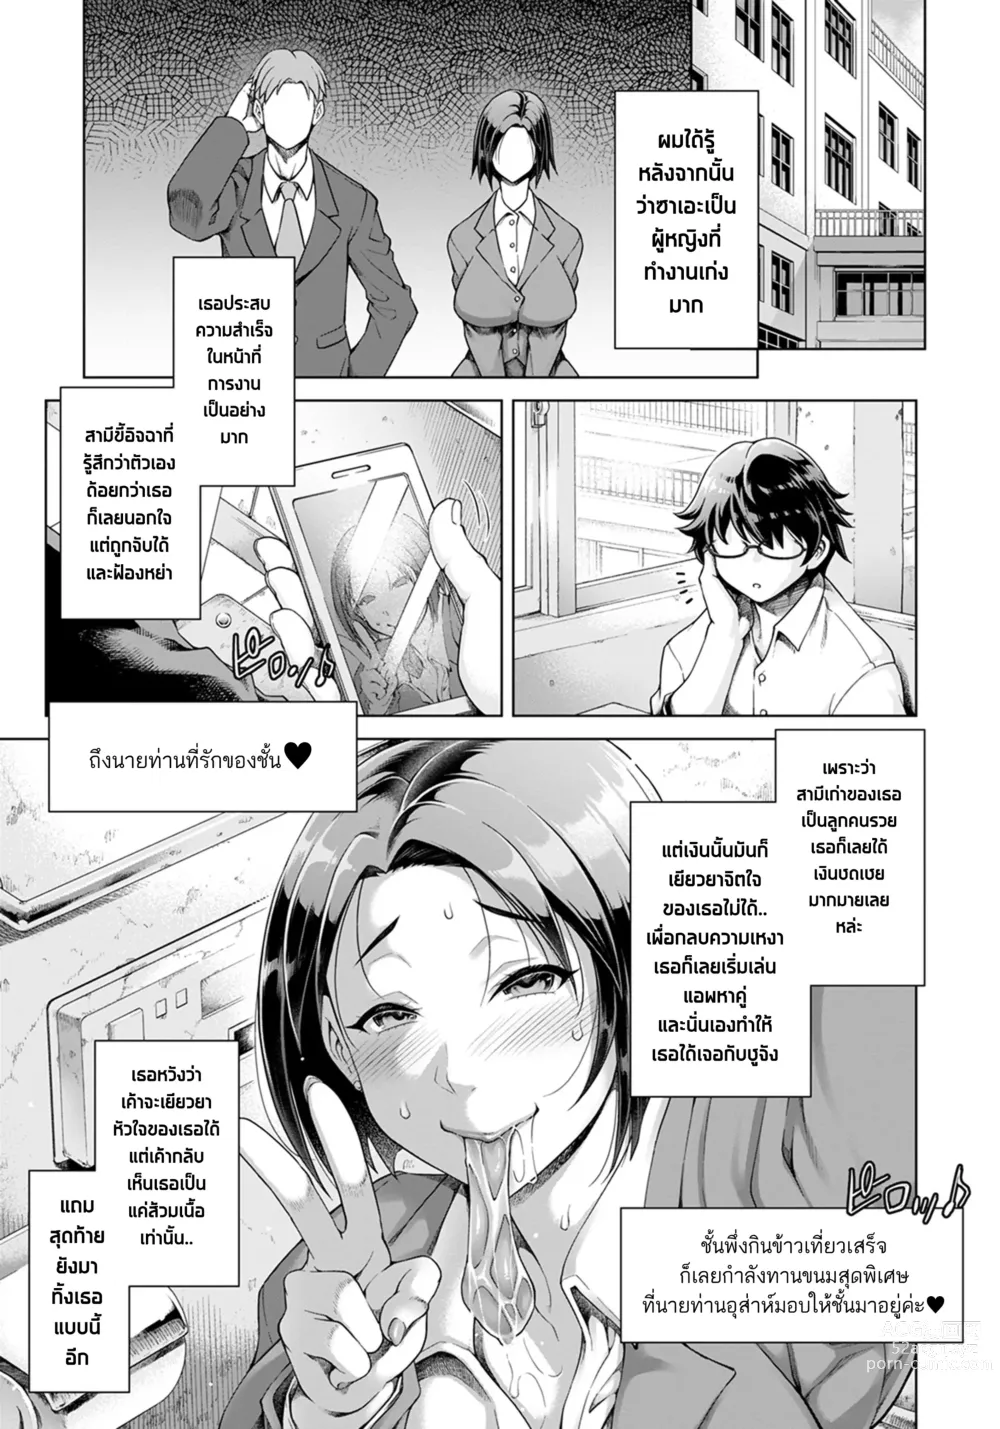 Page 7 of manga ส้วมเนื้อที่มีความสุขที่สุดในโลก